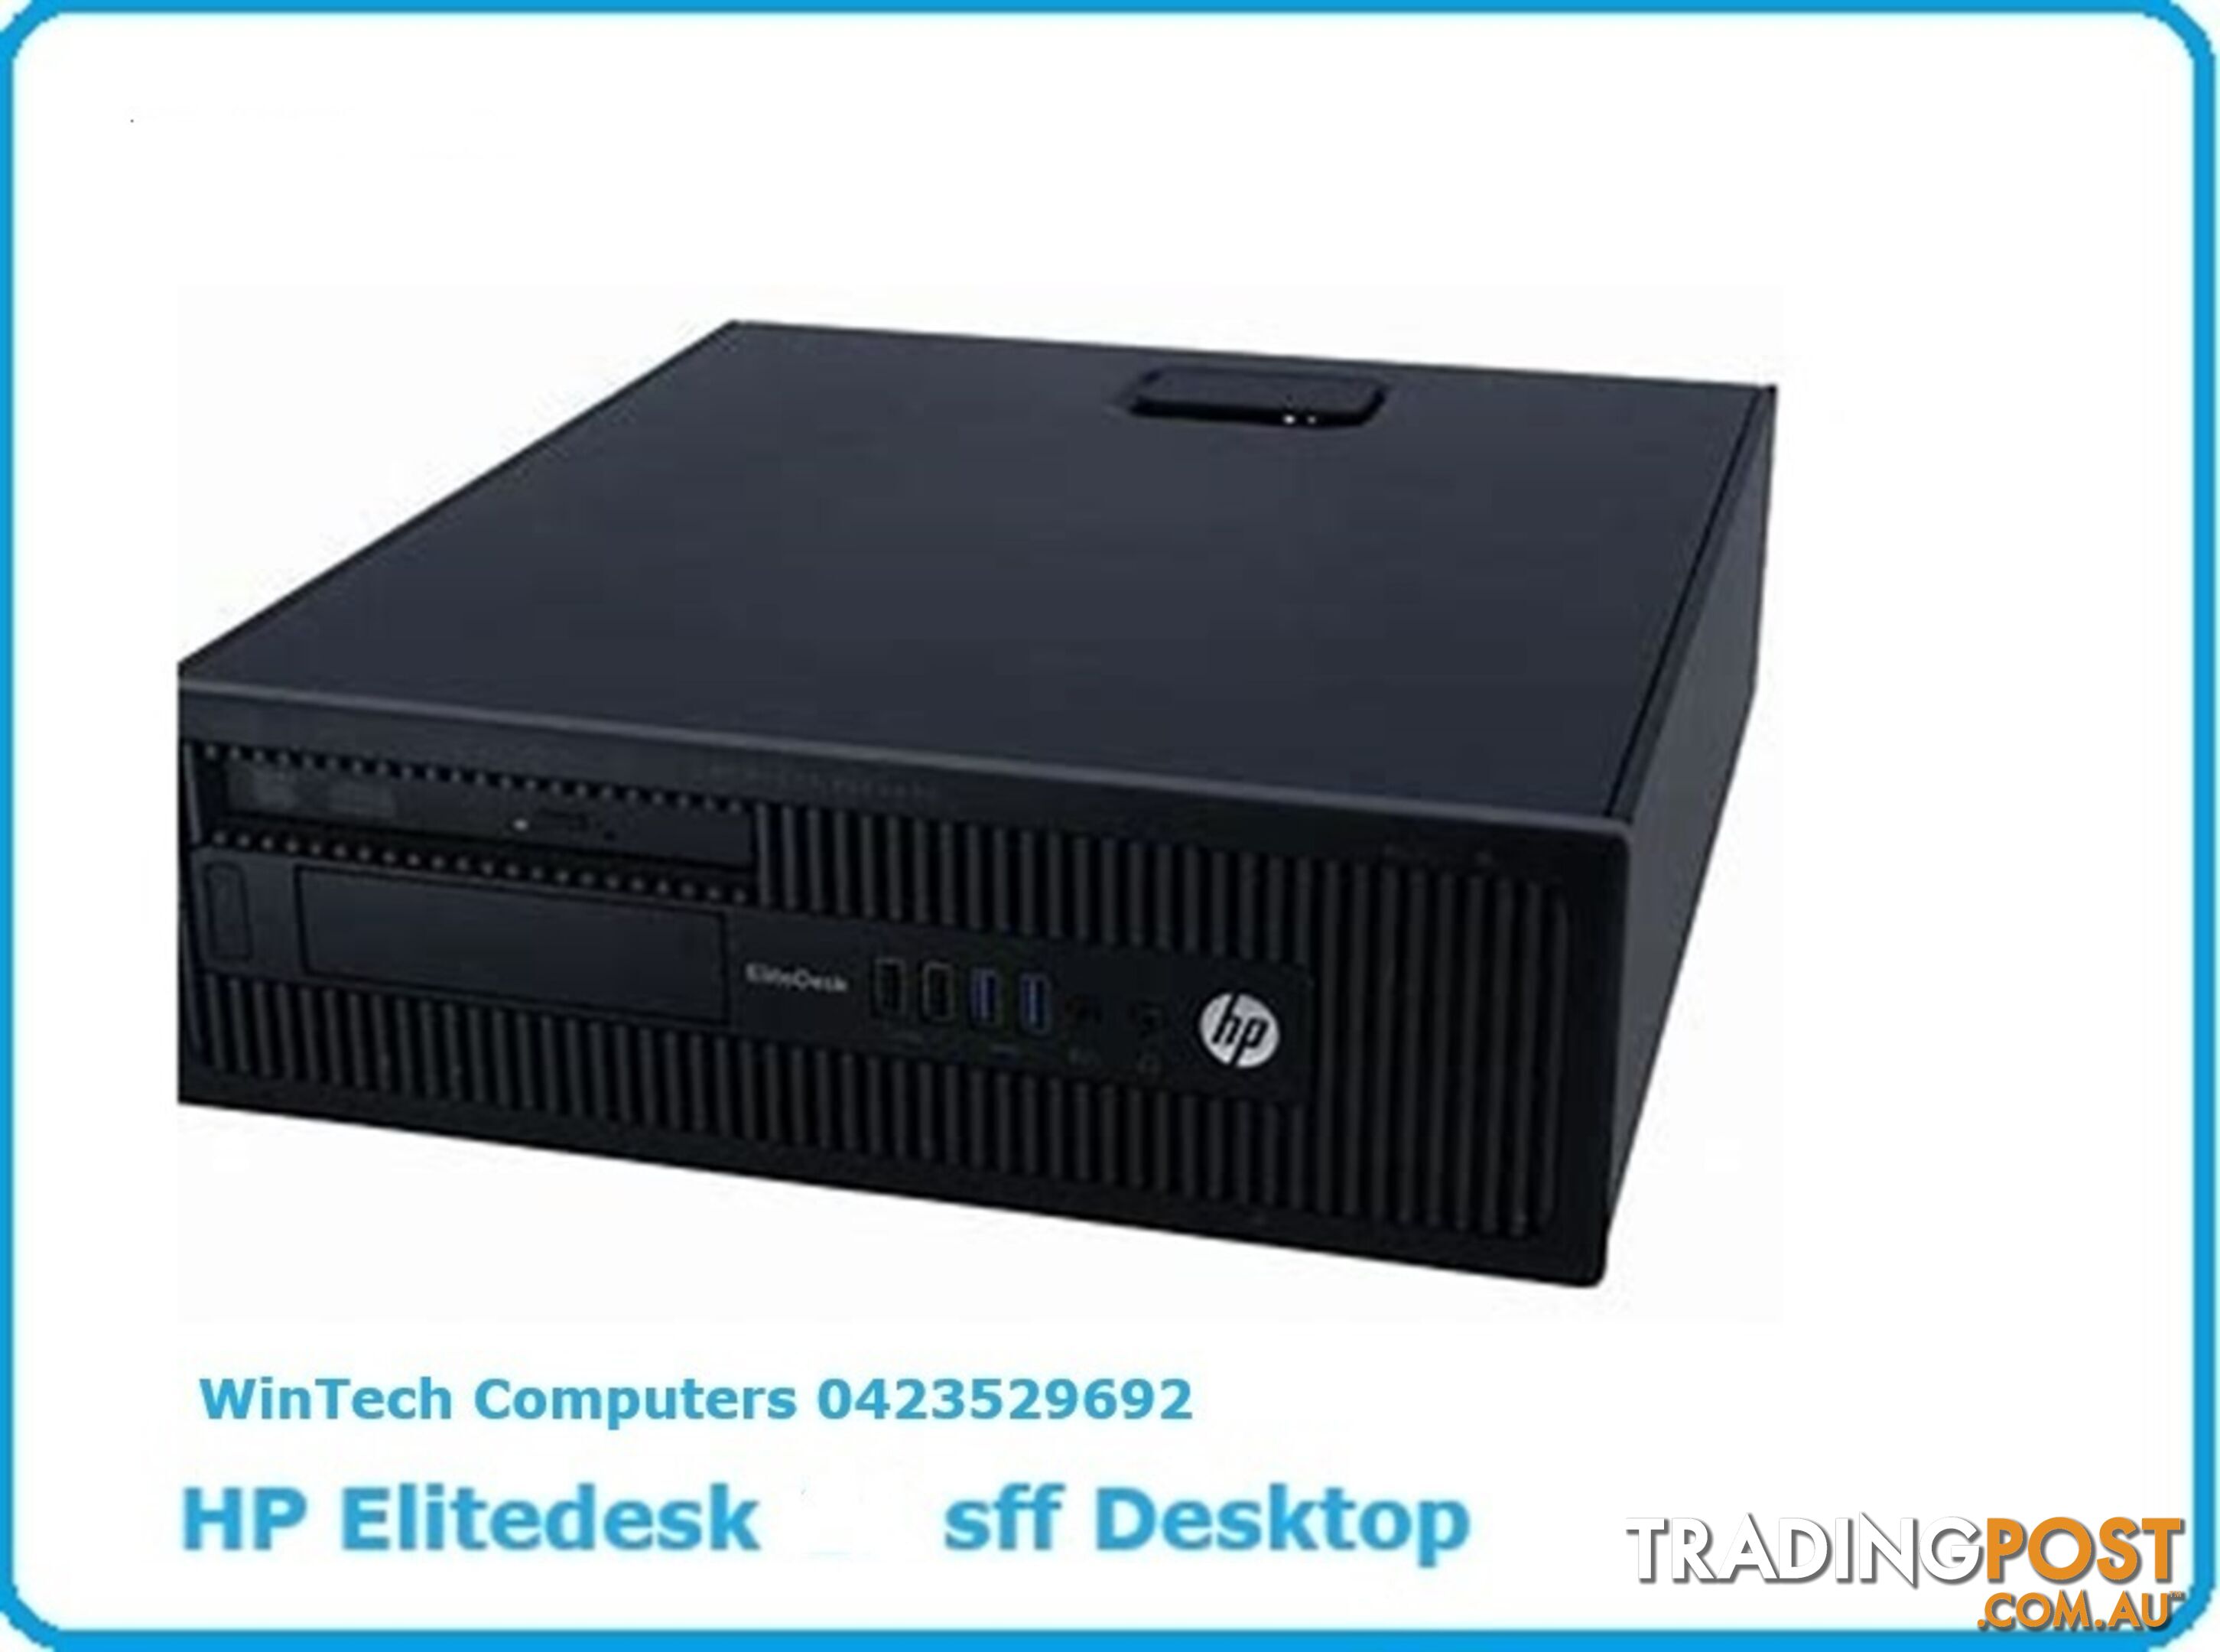 HP EliteDesk 800 G1 sff Desktop Computer